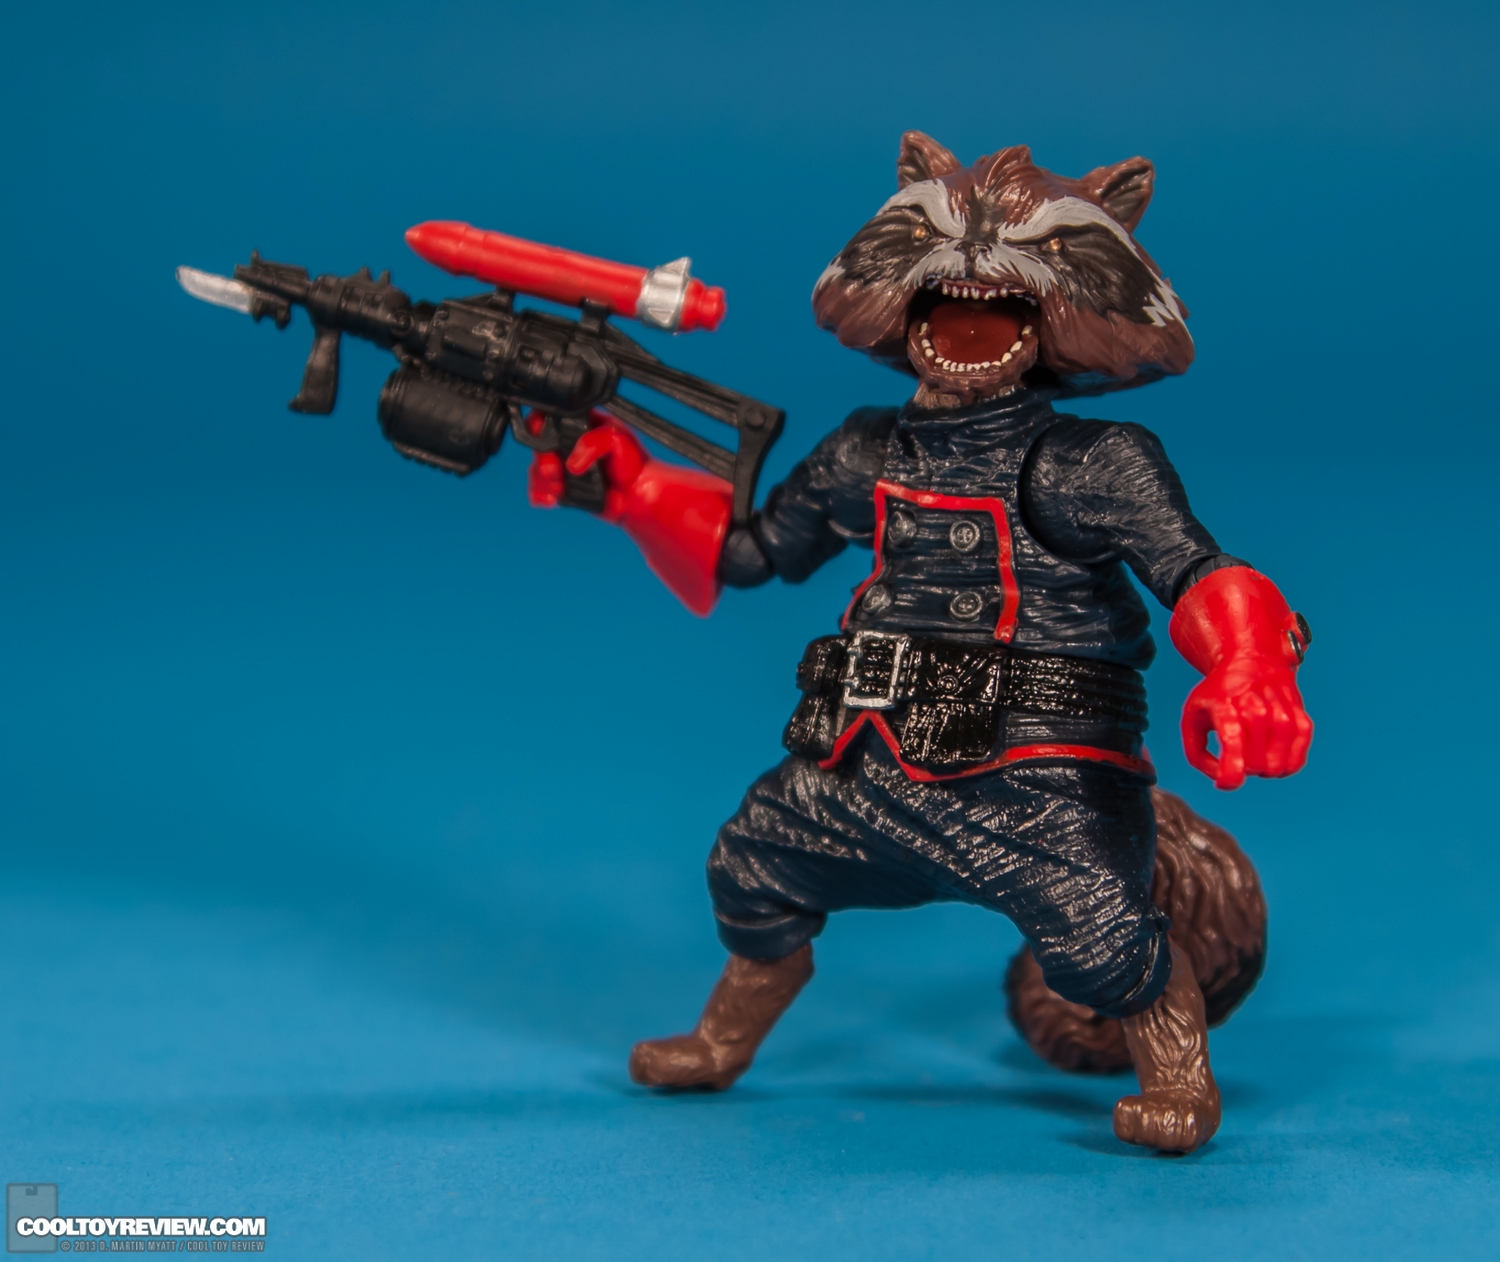 Marvel-Legends-Rocket-Raccoon-Series-Build-A-Figure-Hasbro-009.jpg